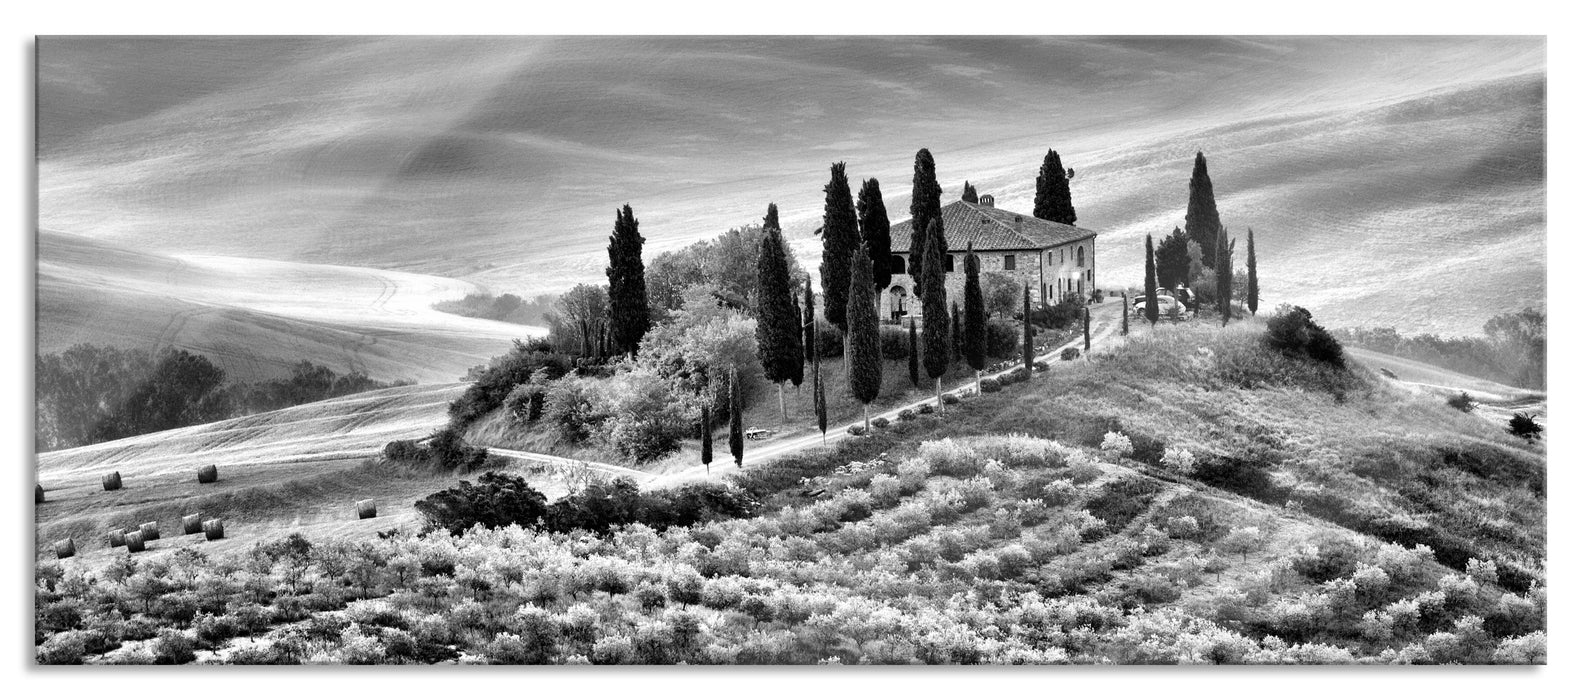 Wunderschöne Toskana Landschaft, Glasbild Panorama